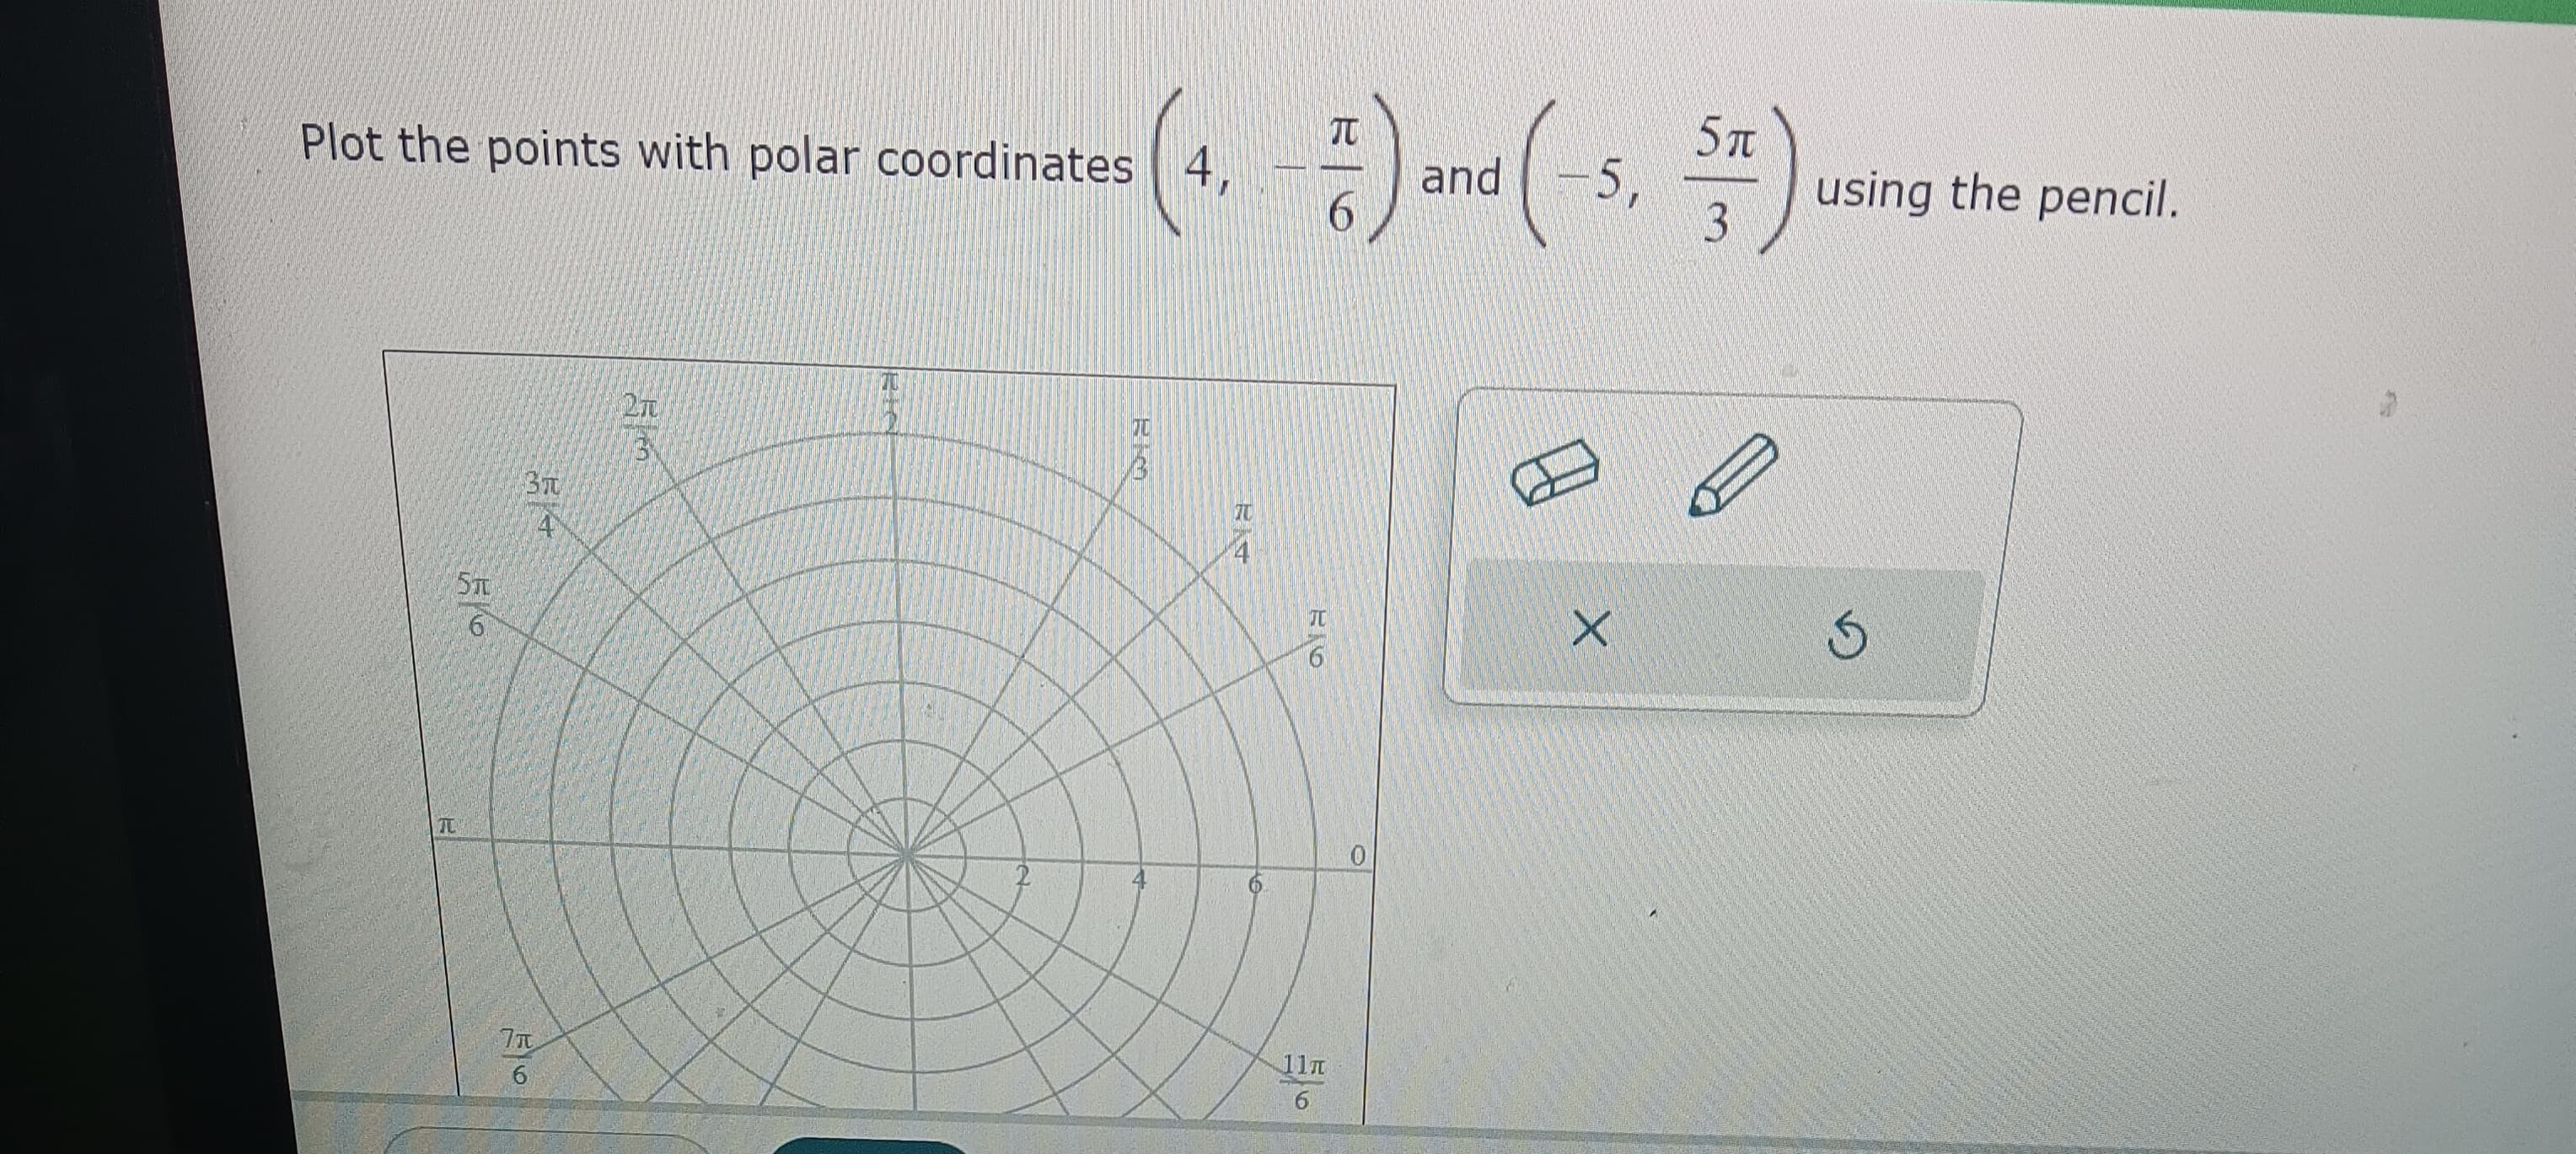 Plot the points with polar coordinates 4,
TU
51
6
BI
Bethany
4
7T
6
LT
plan
3
5π
(4.) and (-5. $ ) usin
3
2
BIO
70
RIO
TO
6
11T
6
0
X
using the pencil.
S